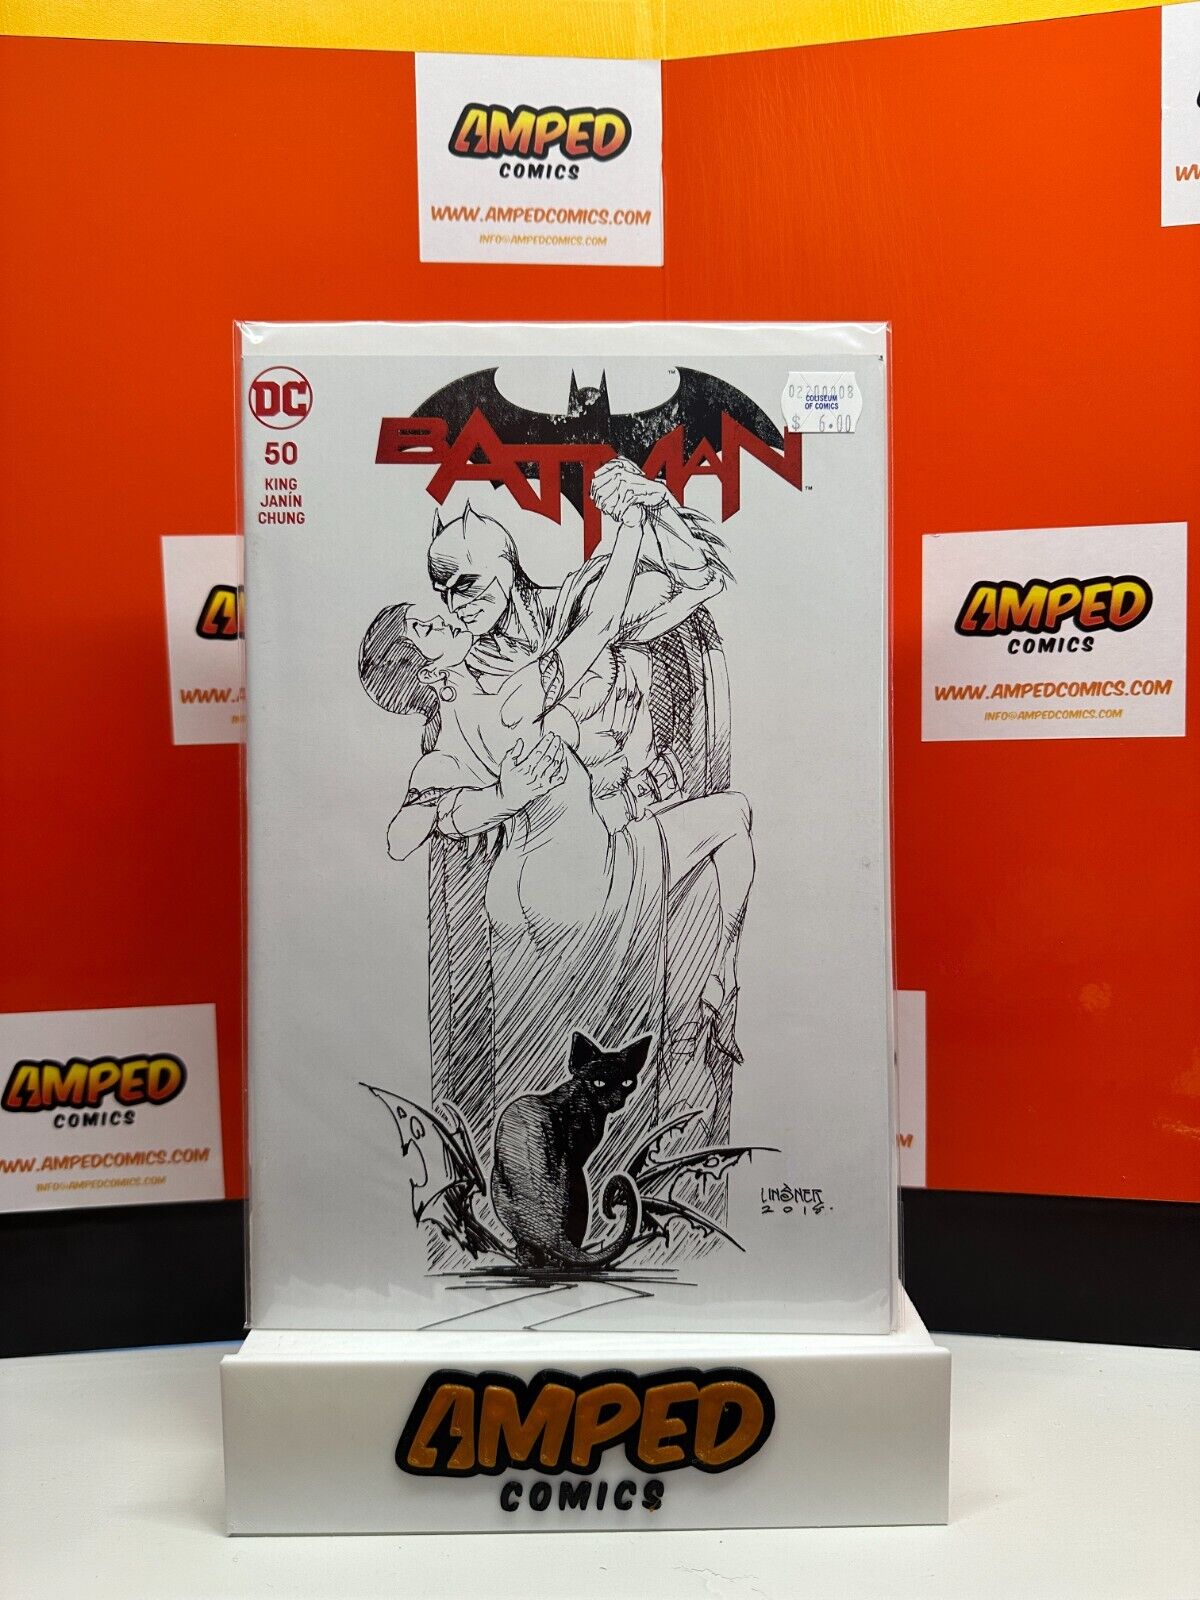 BATMAN # 50 GALAXY COMIC EXCLUSIVE LINSNER SKETCH ART VARIANT COVER